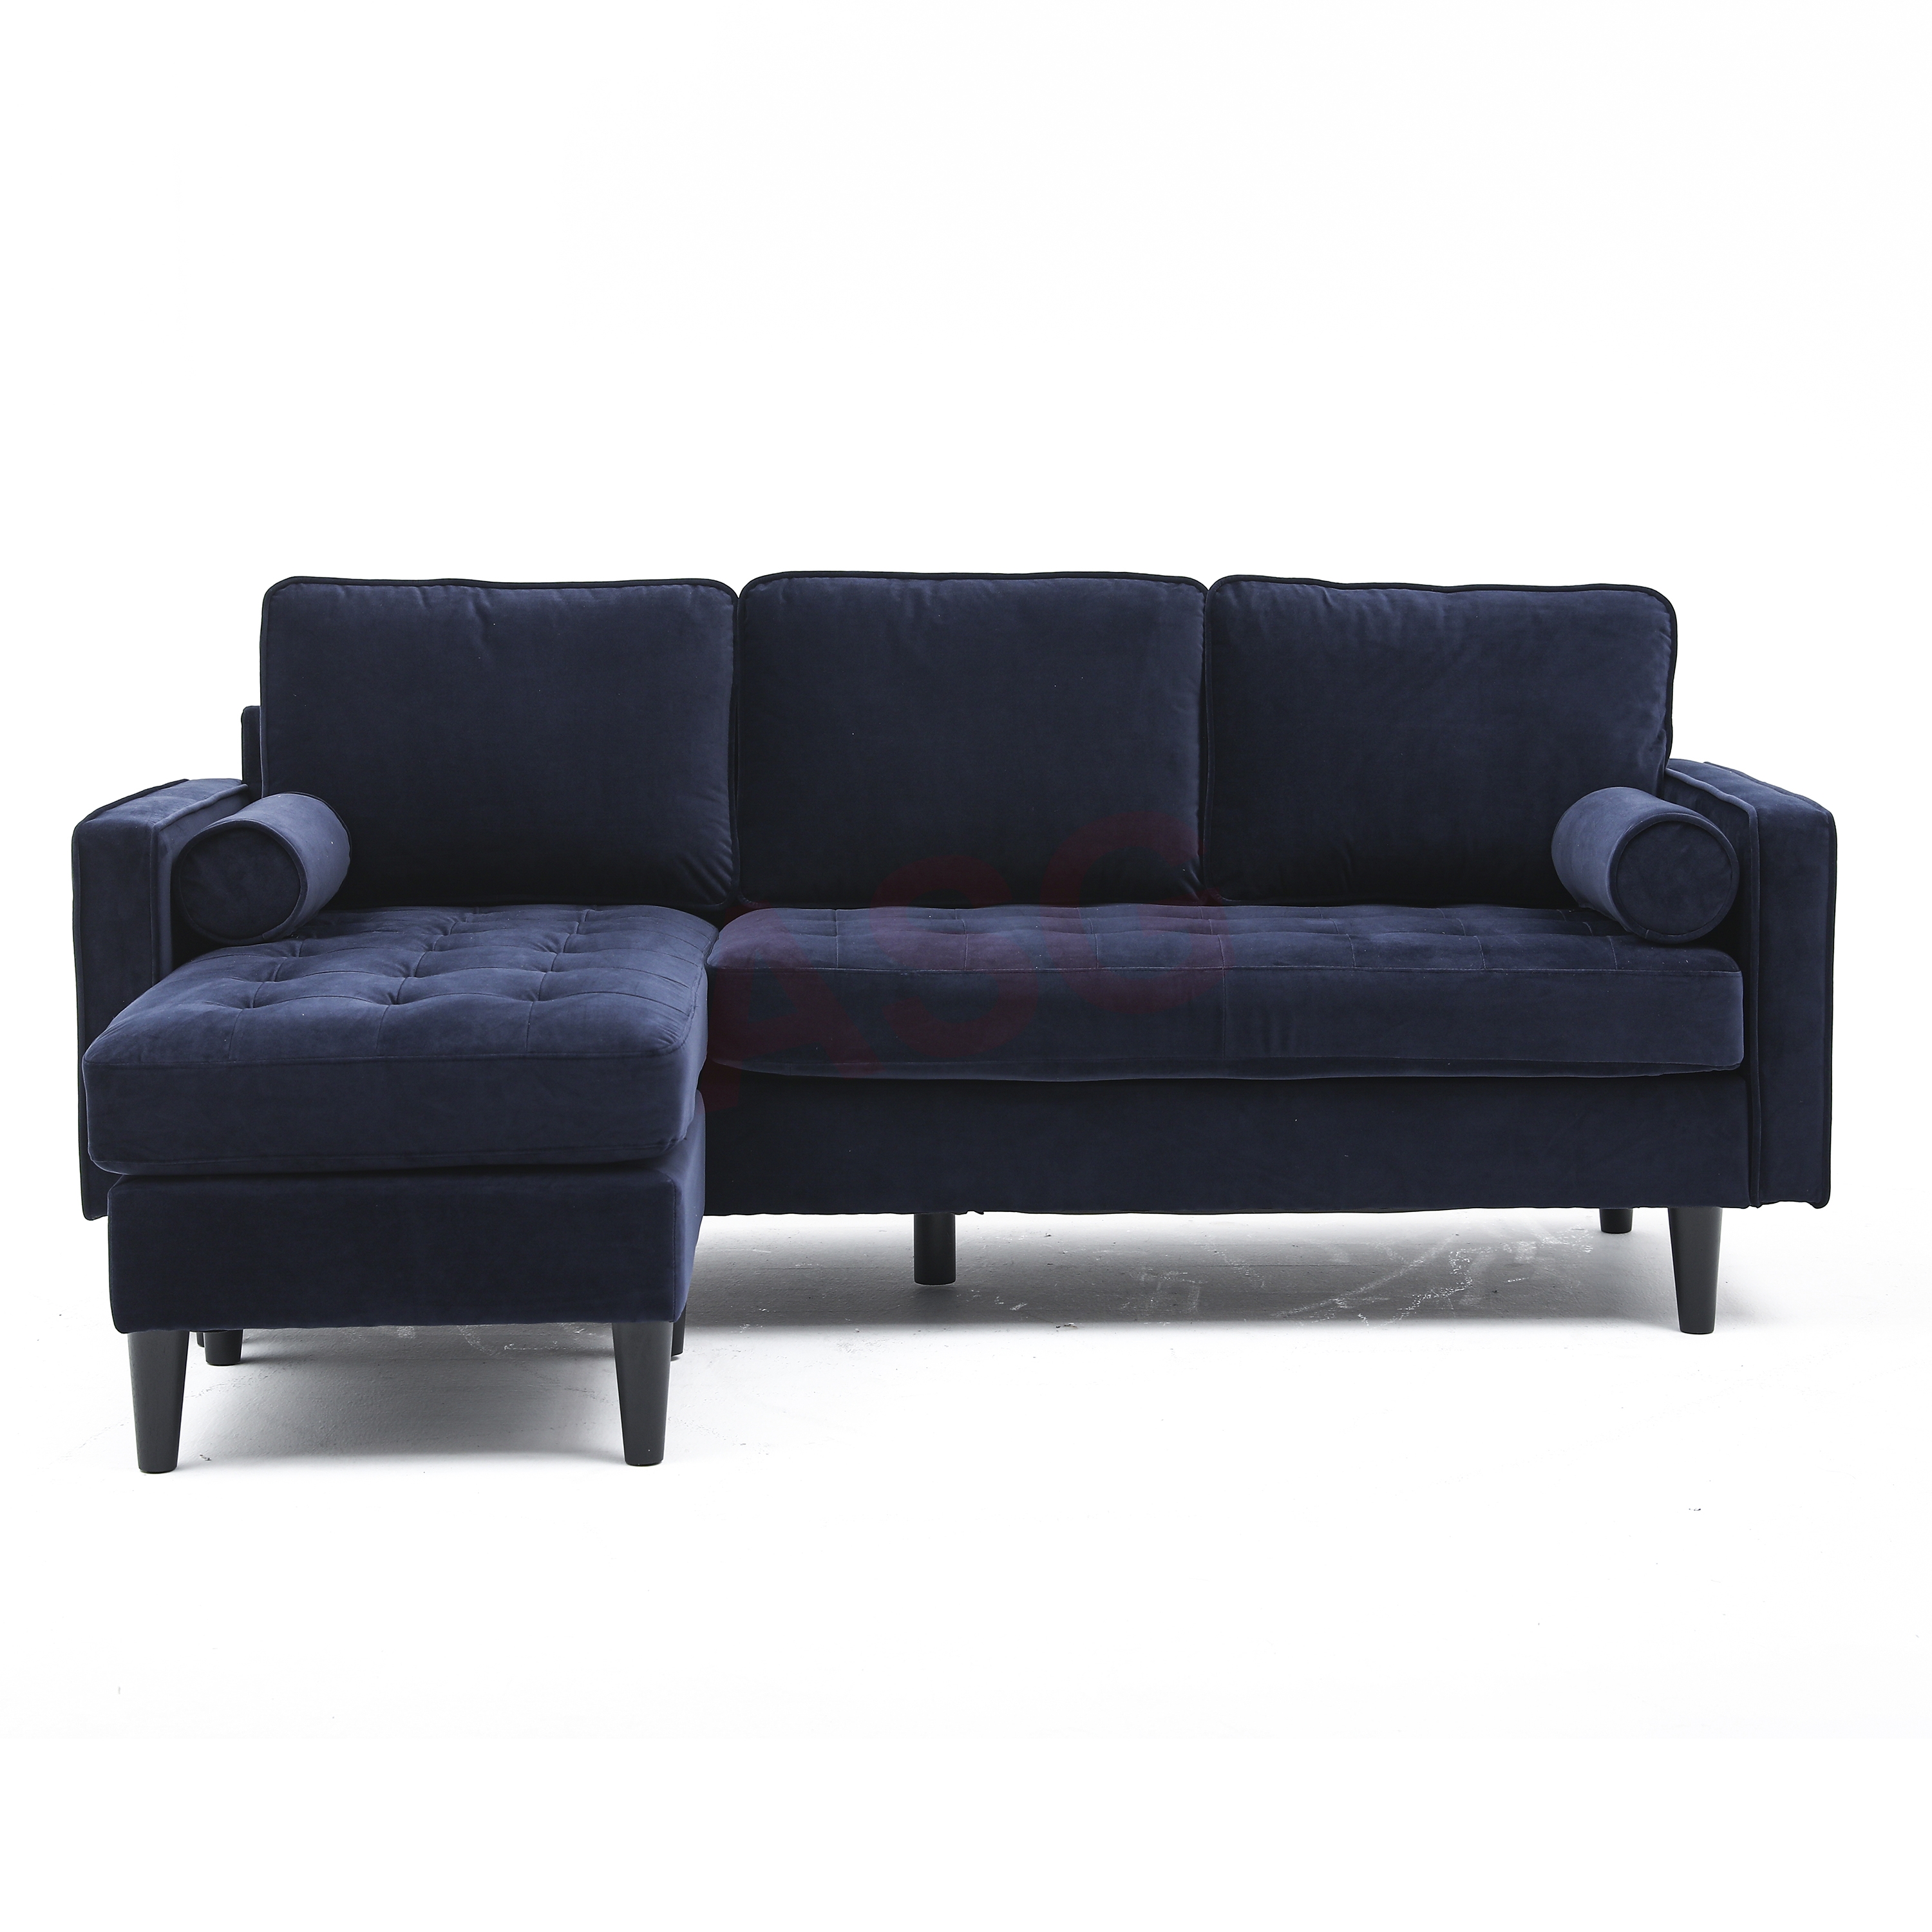 Trud L-shaped 3 Seater Sofa